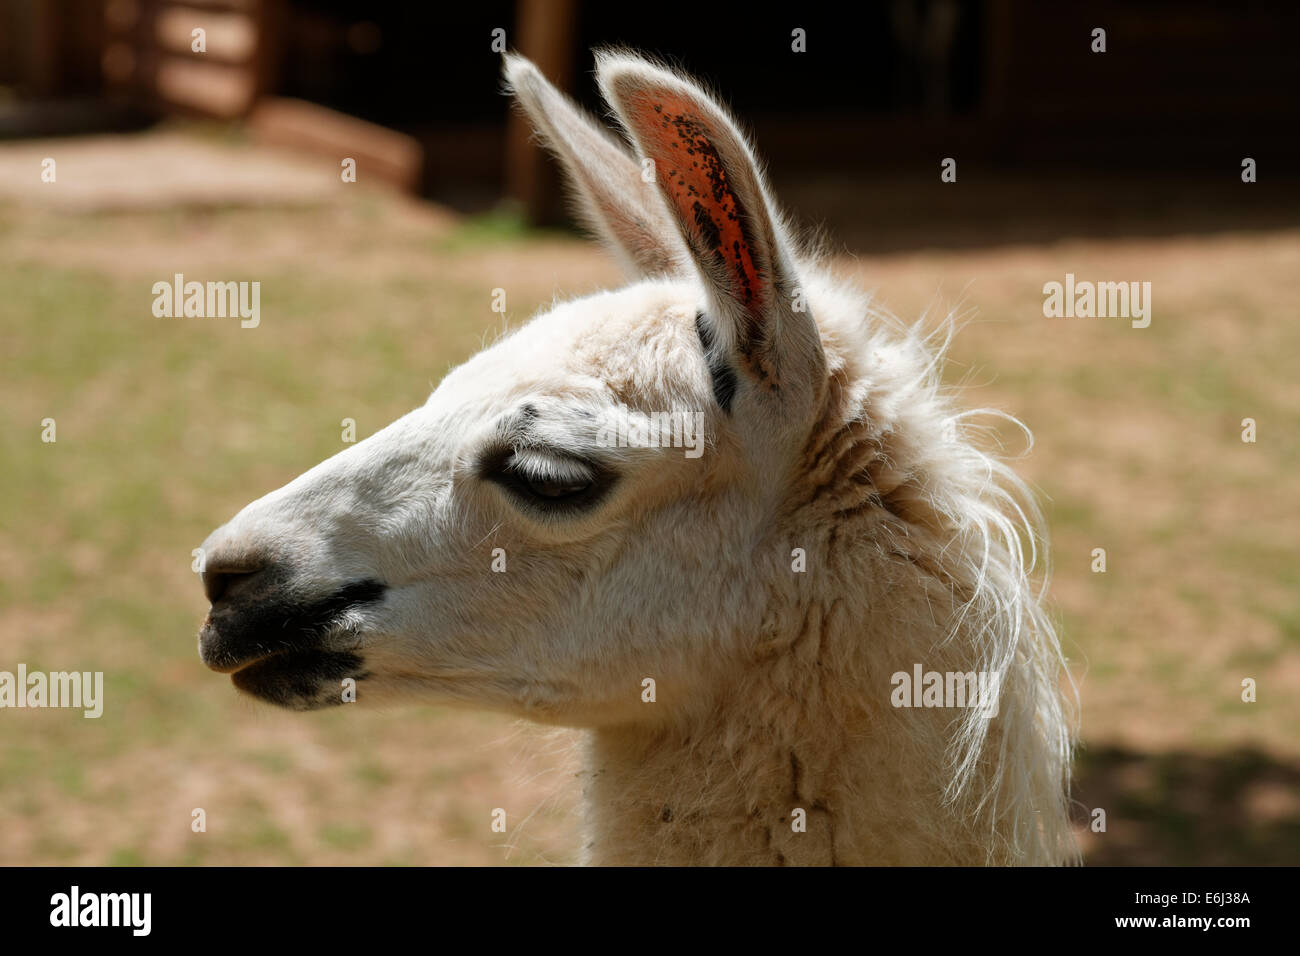 Llama portrait Stock Photo